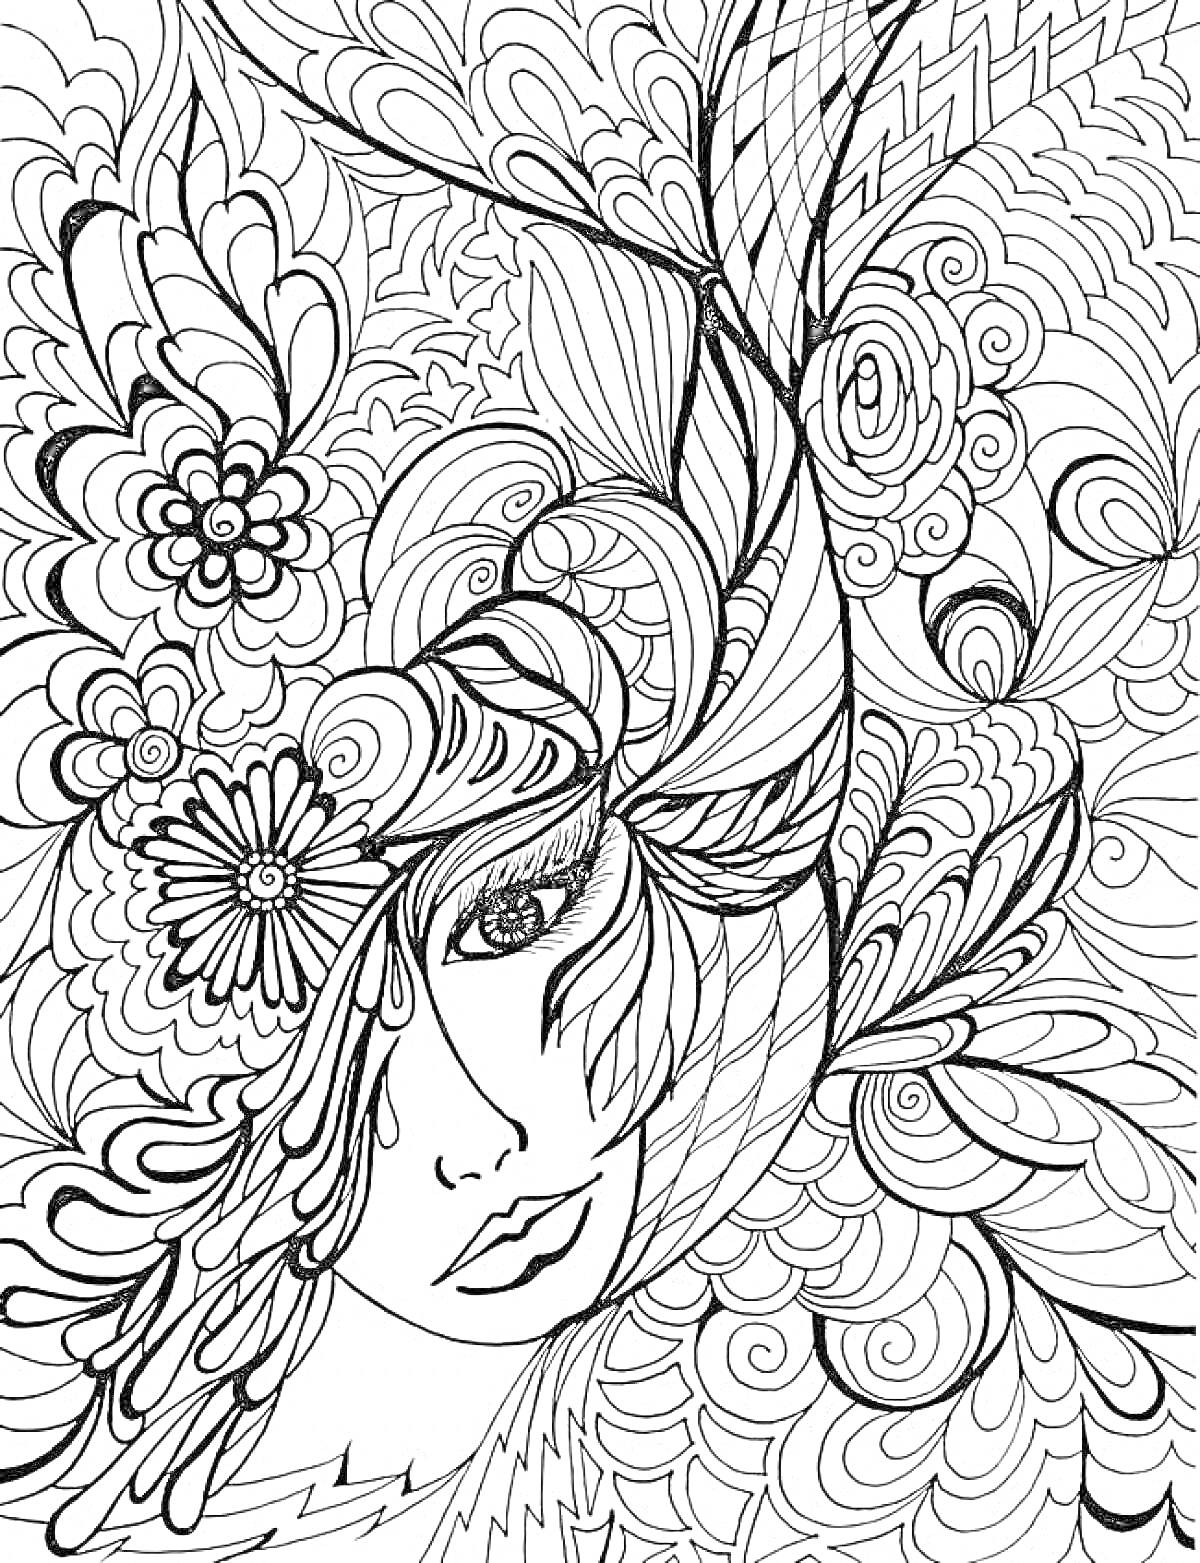 Раскраска Лицо девушки с цветами и узорами